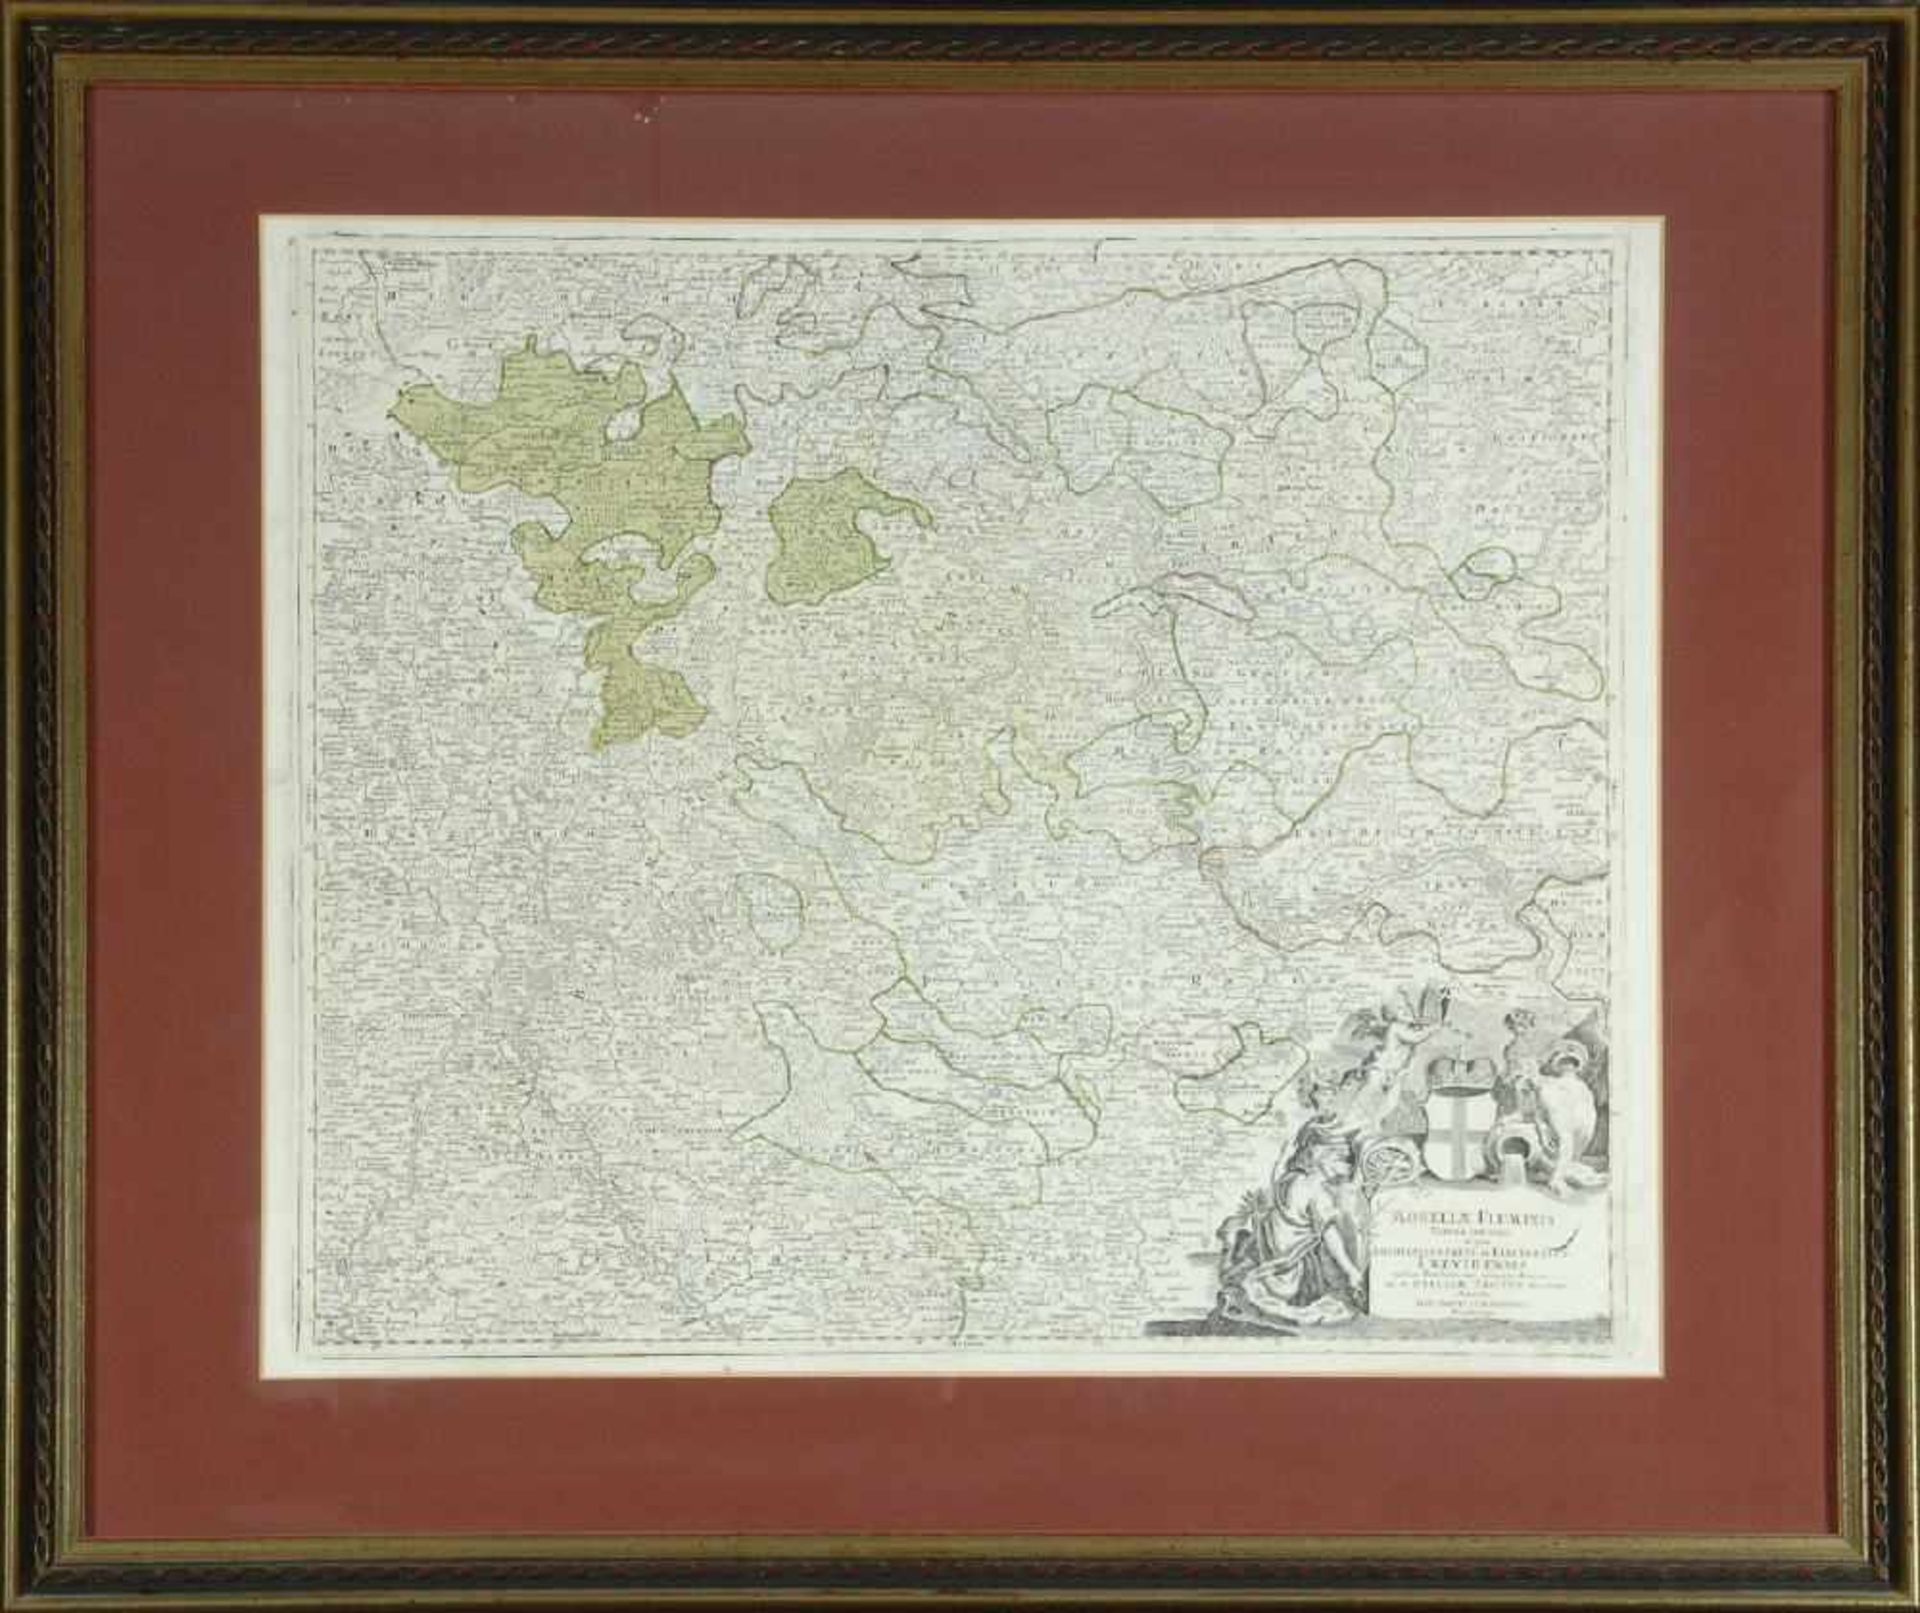 Landkarte "Mosellae Fluminus tabula specialis"